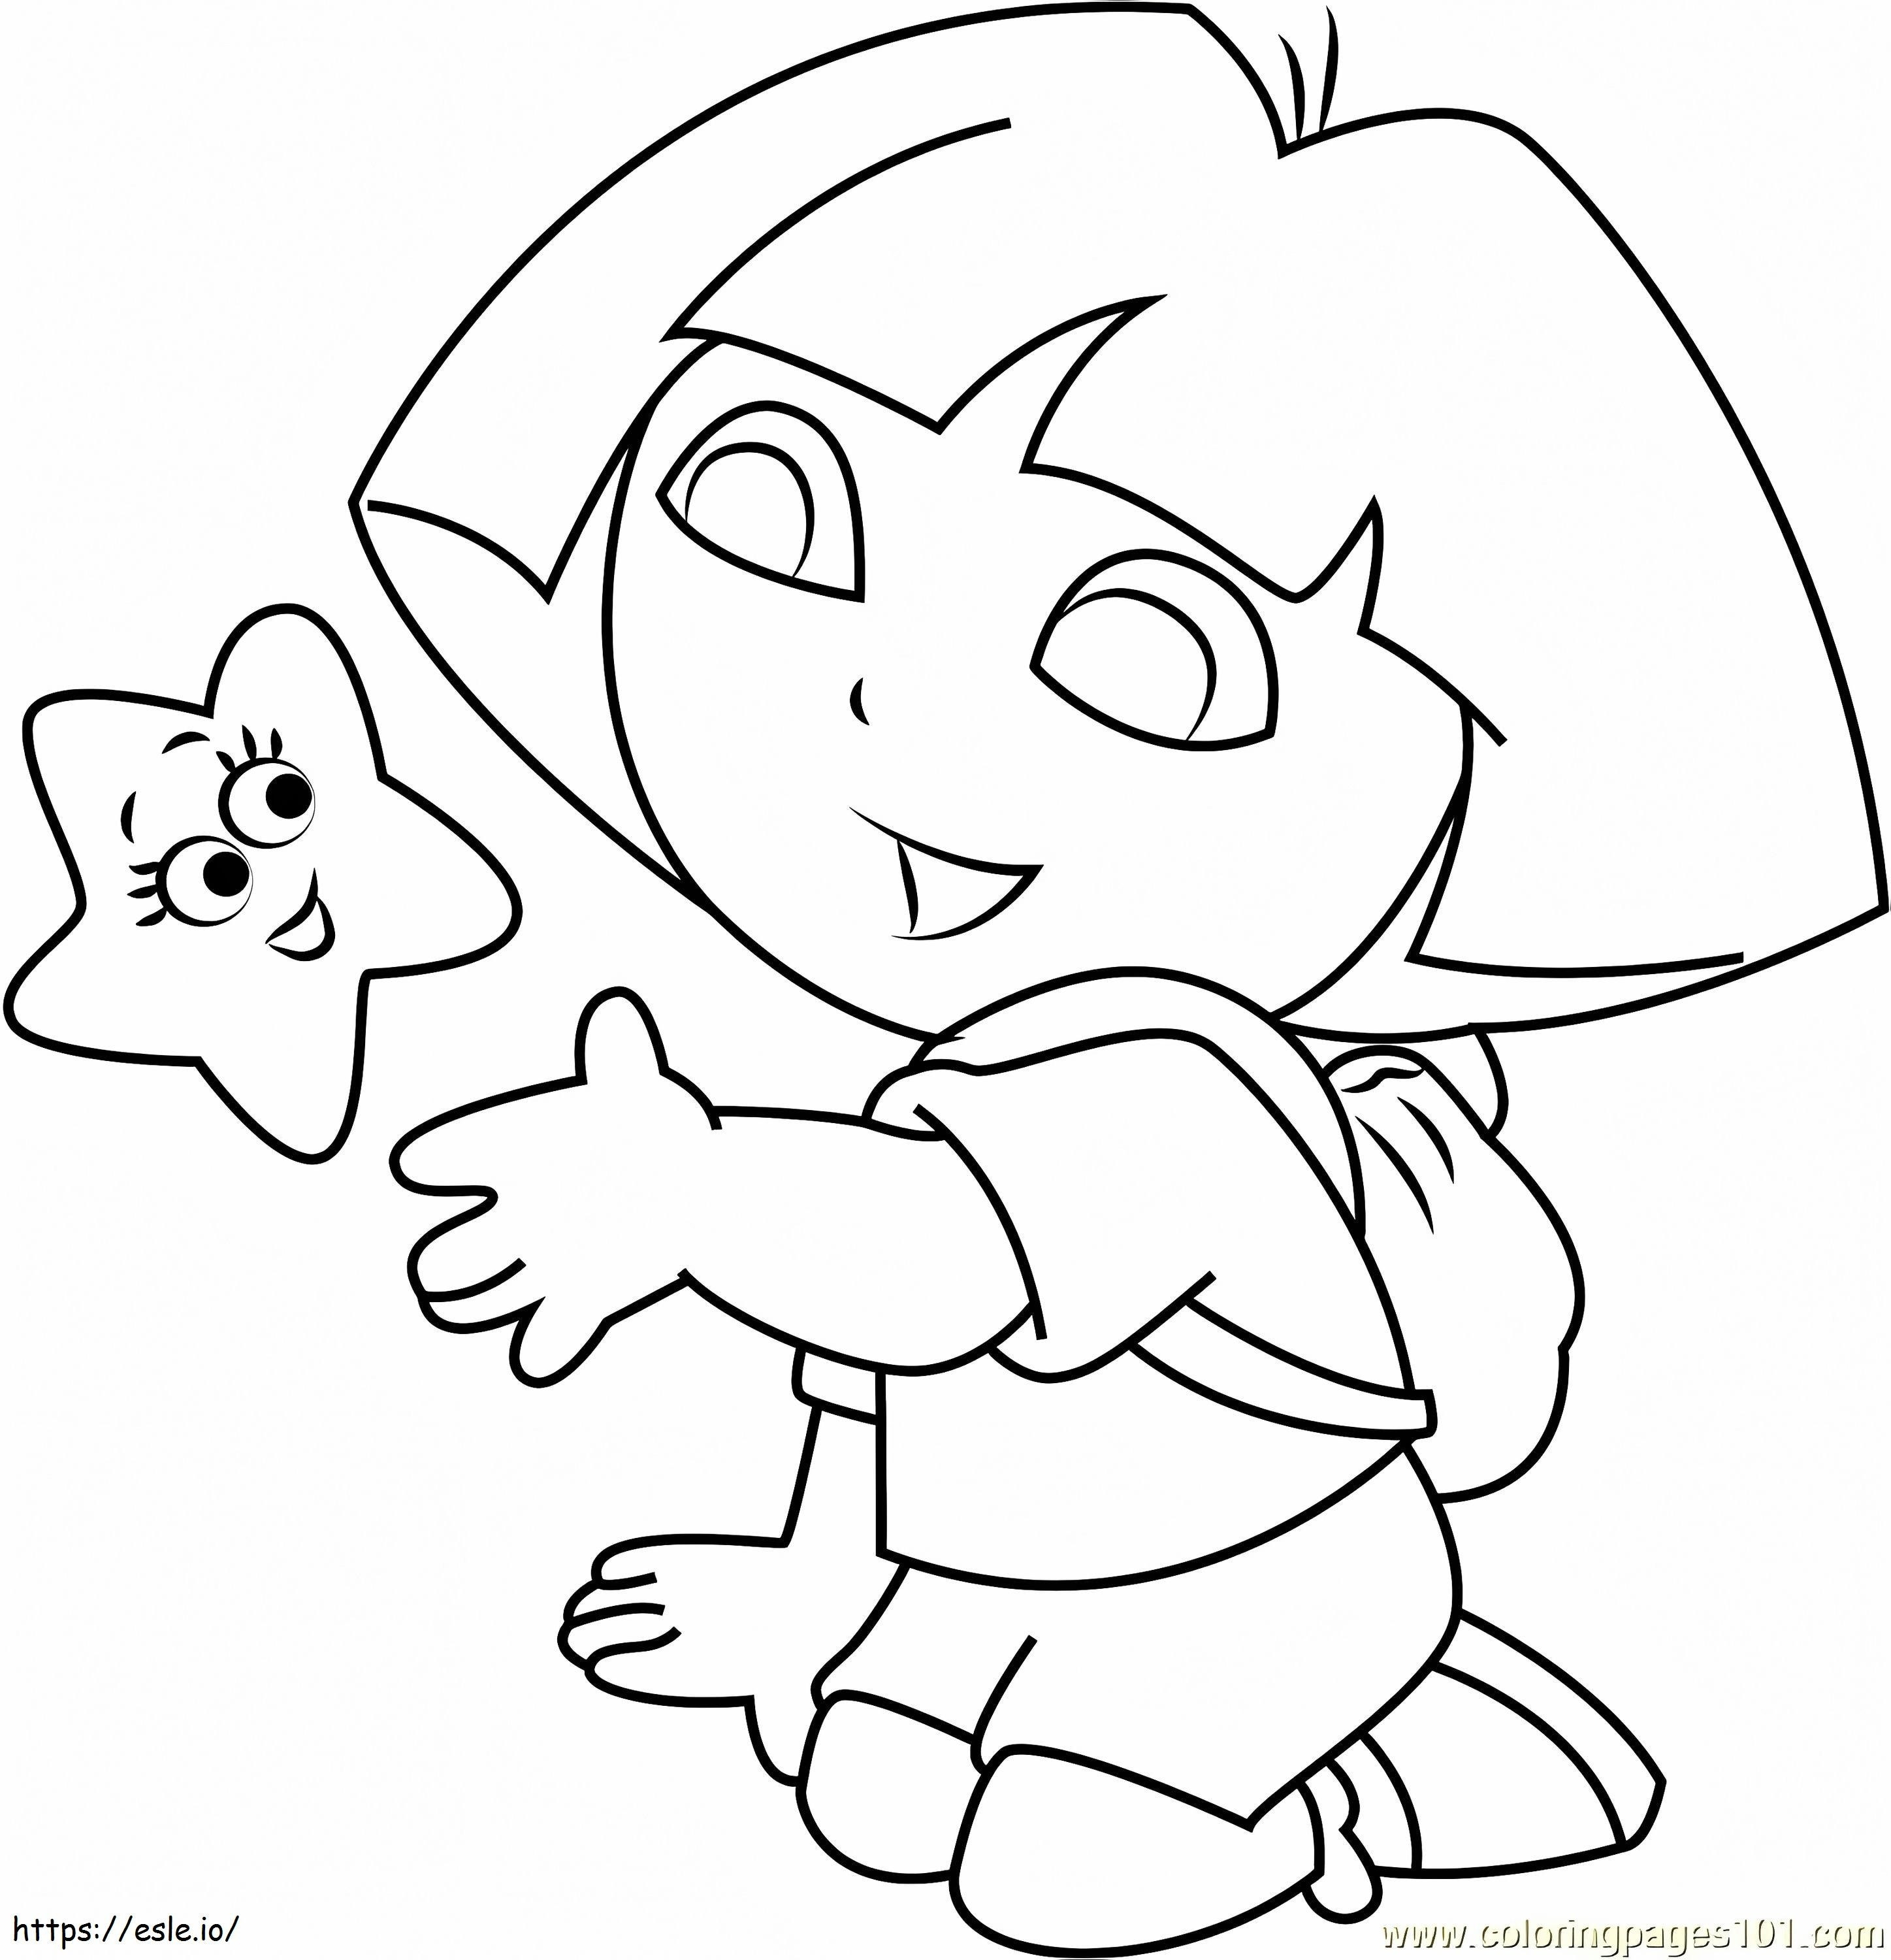 1531187608_Dora con estrella de dibujos animados A4 para colorear